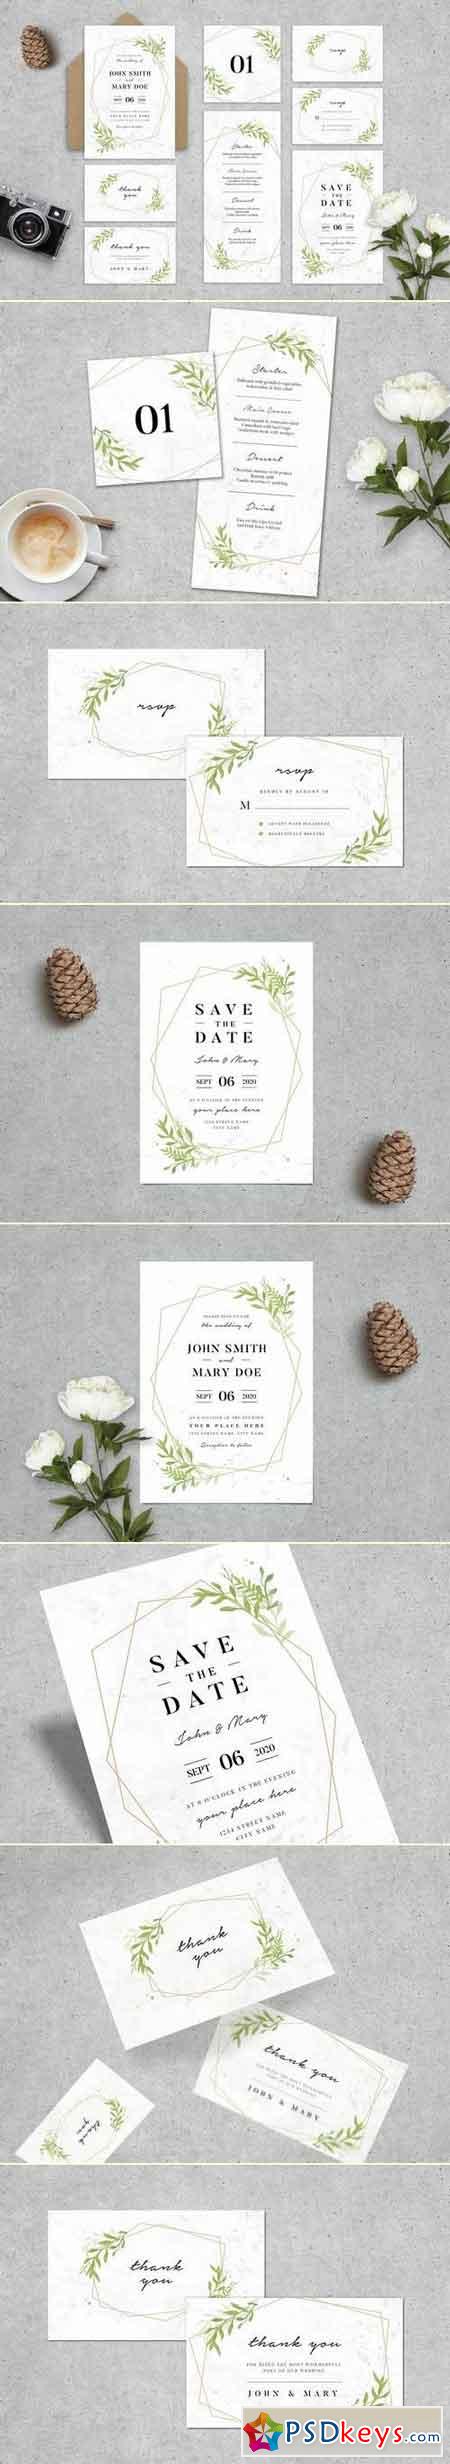 Geometric Wedding Invitation Suite